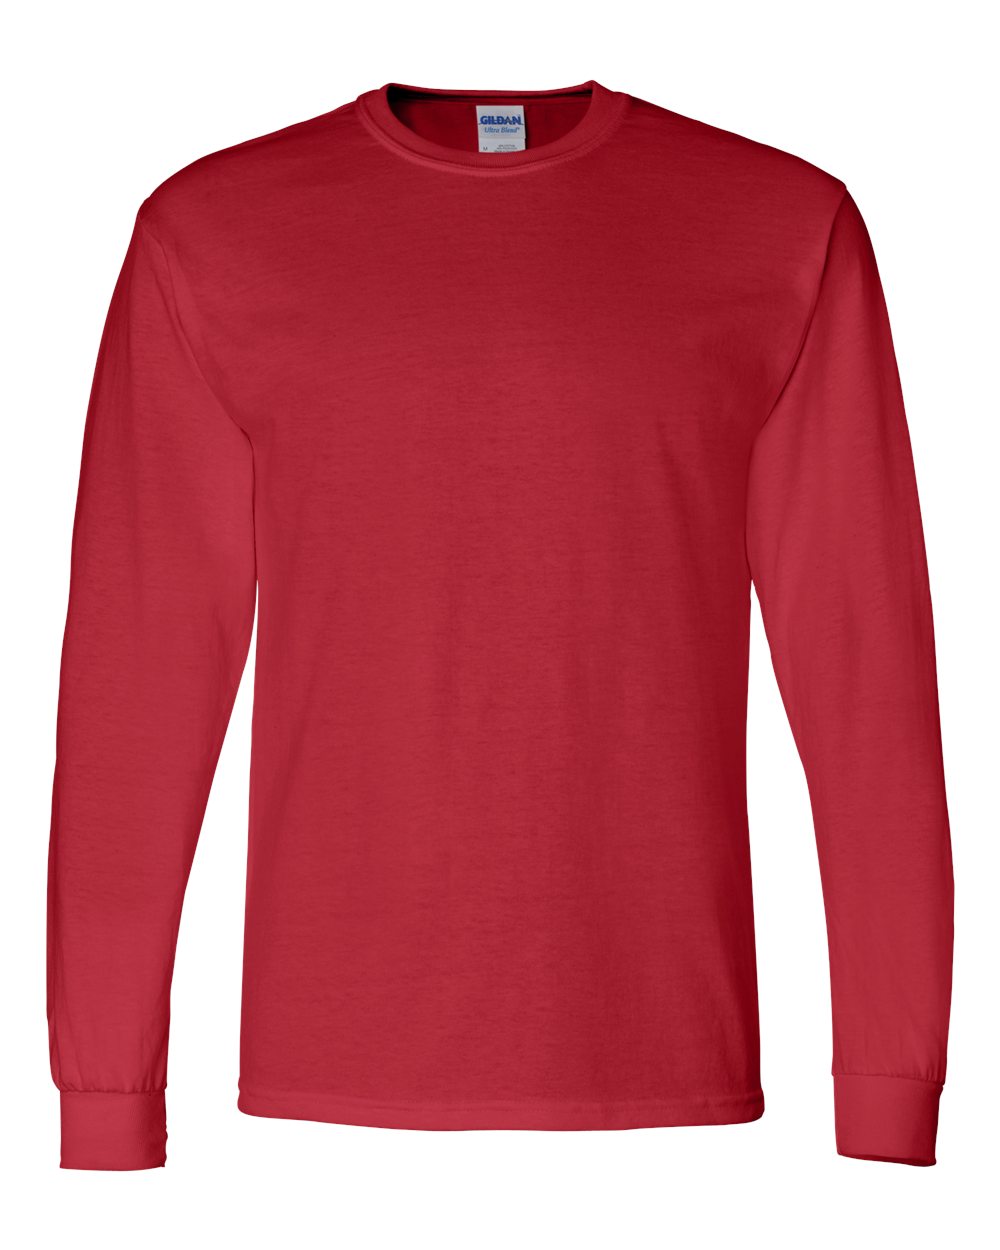 Goshen Football Design 9 Long Sleeve Shirt